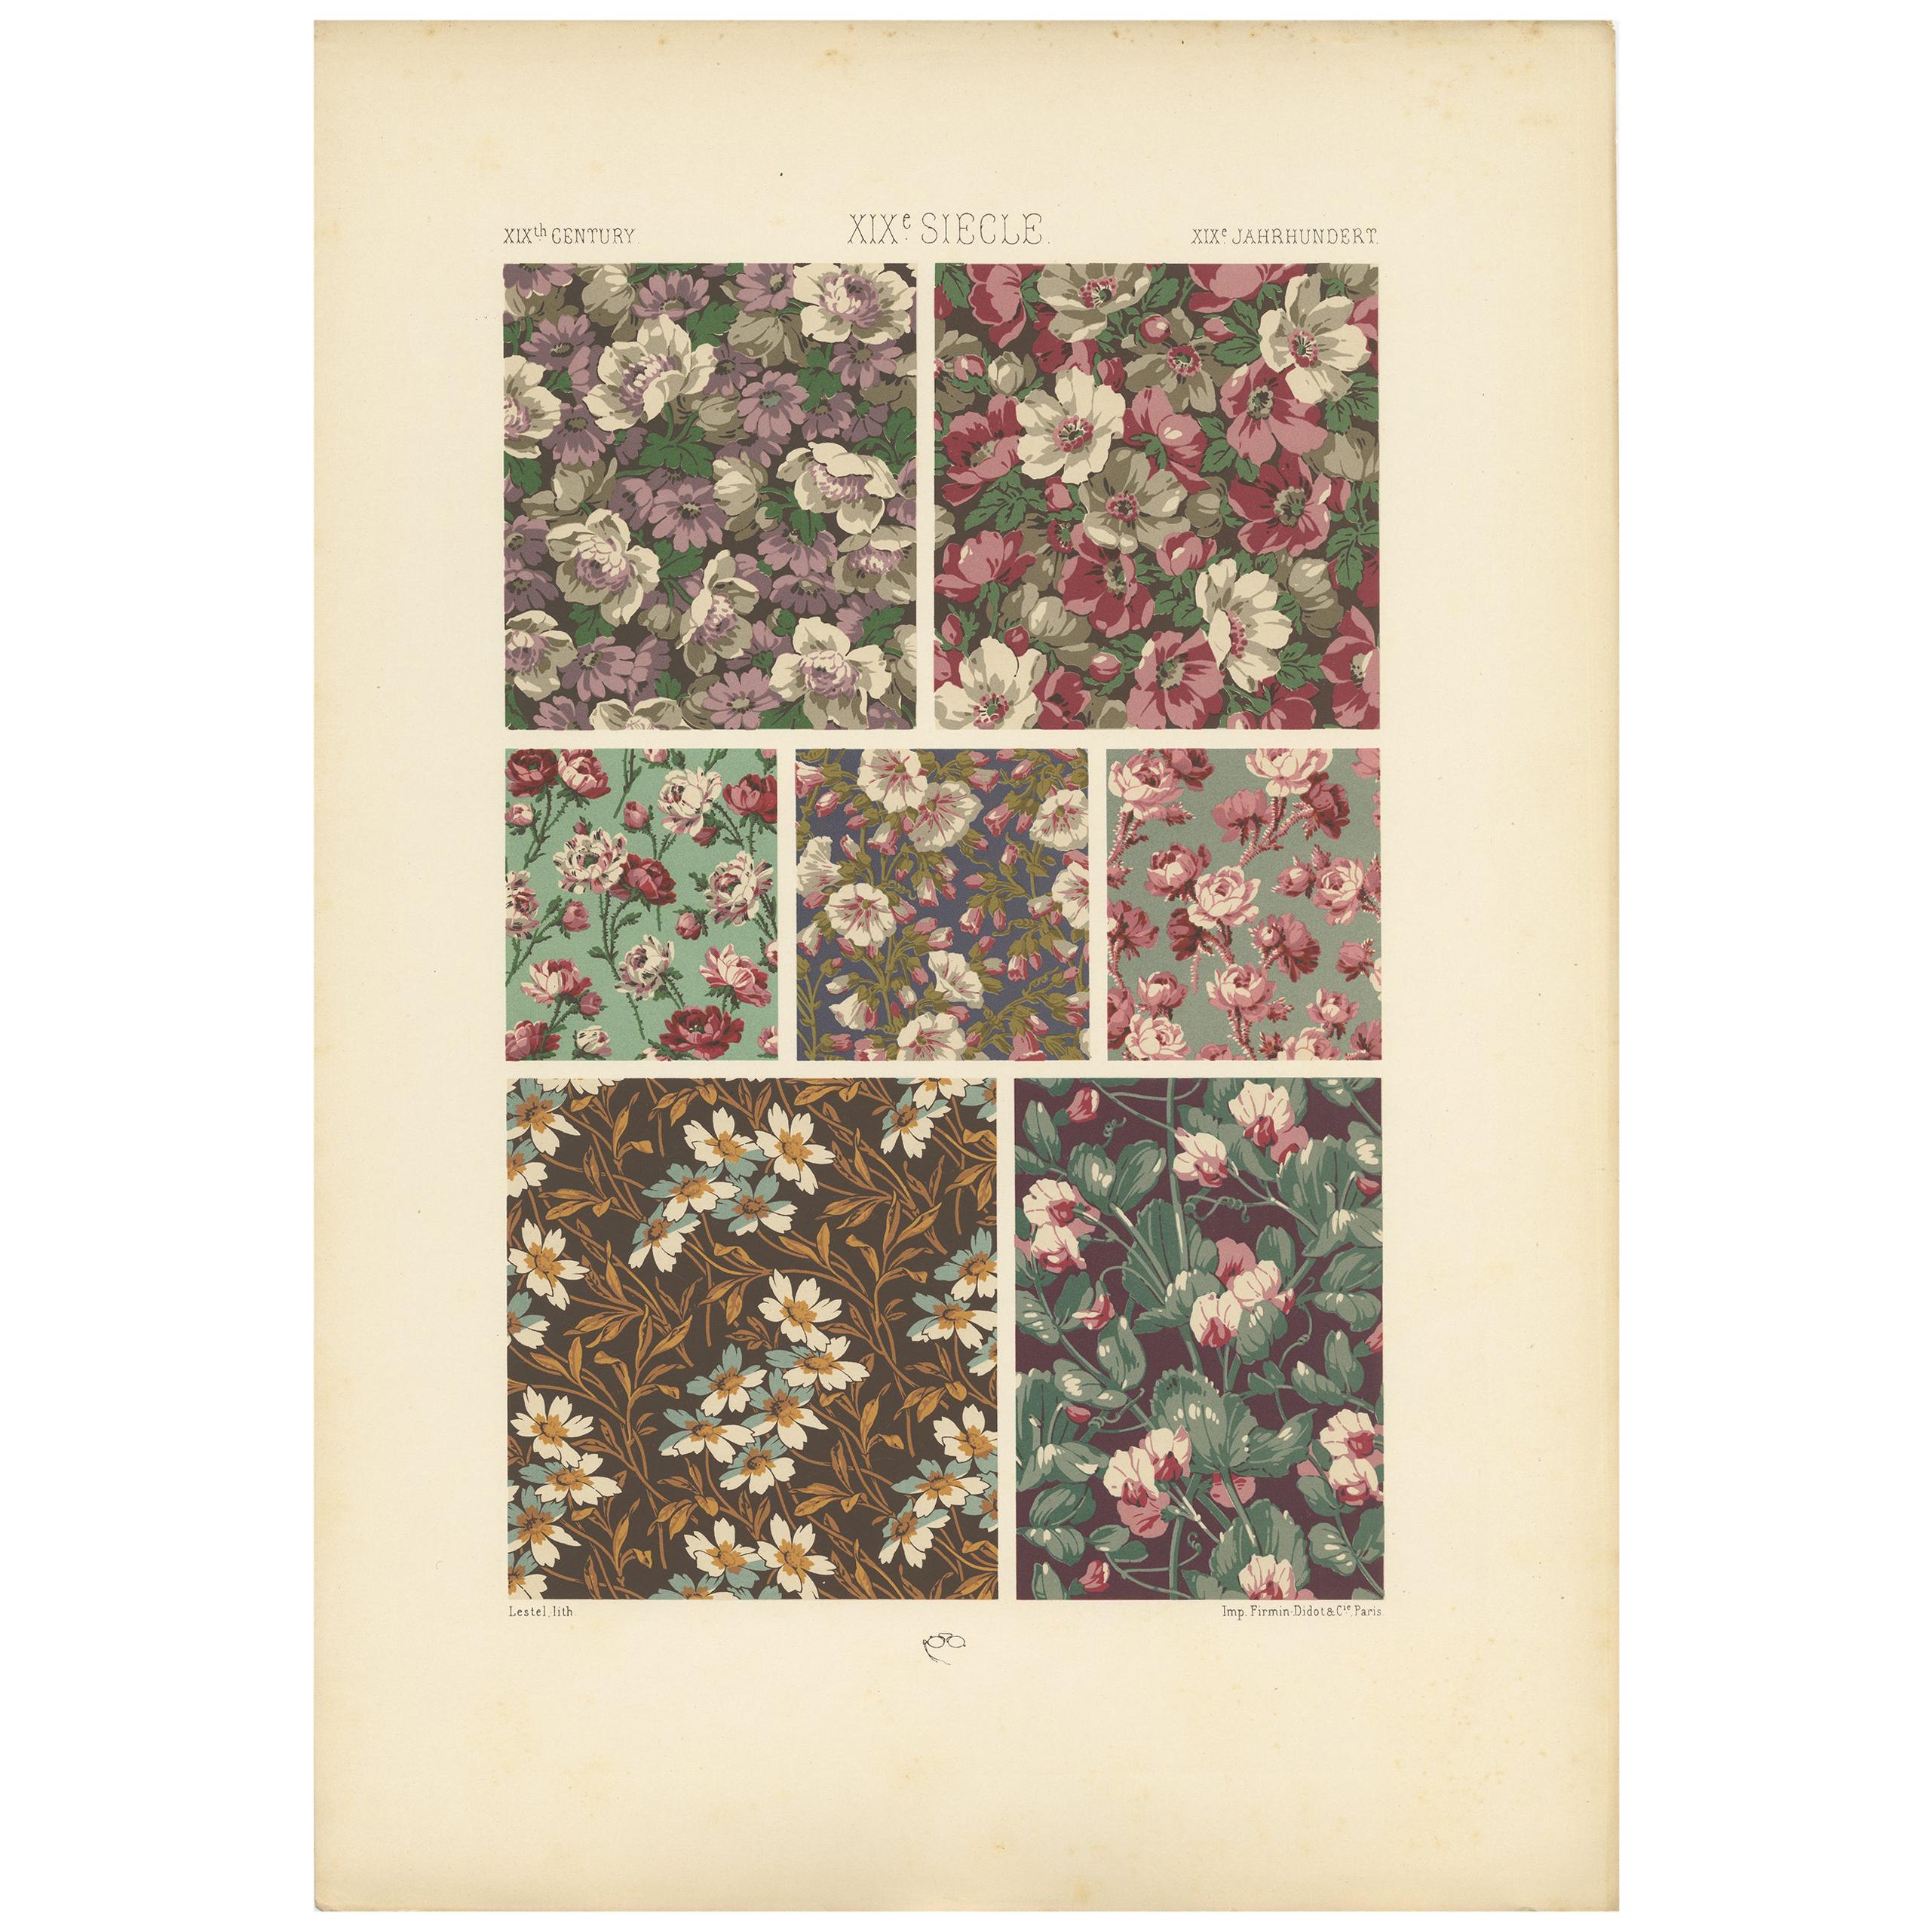 Pl. 120 Antique Print of 19th Century Floral Designs by Racinet, circa 1890